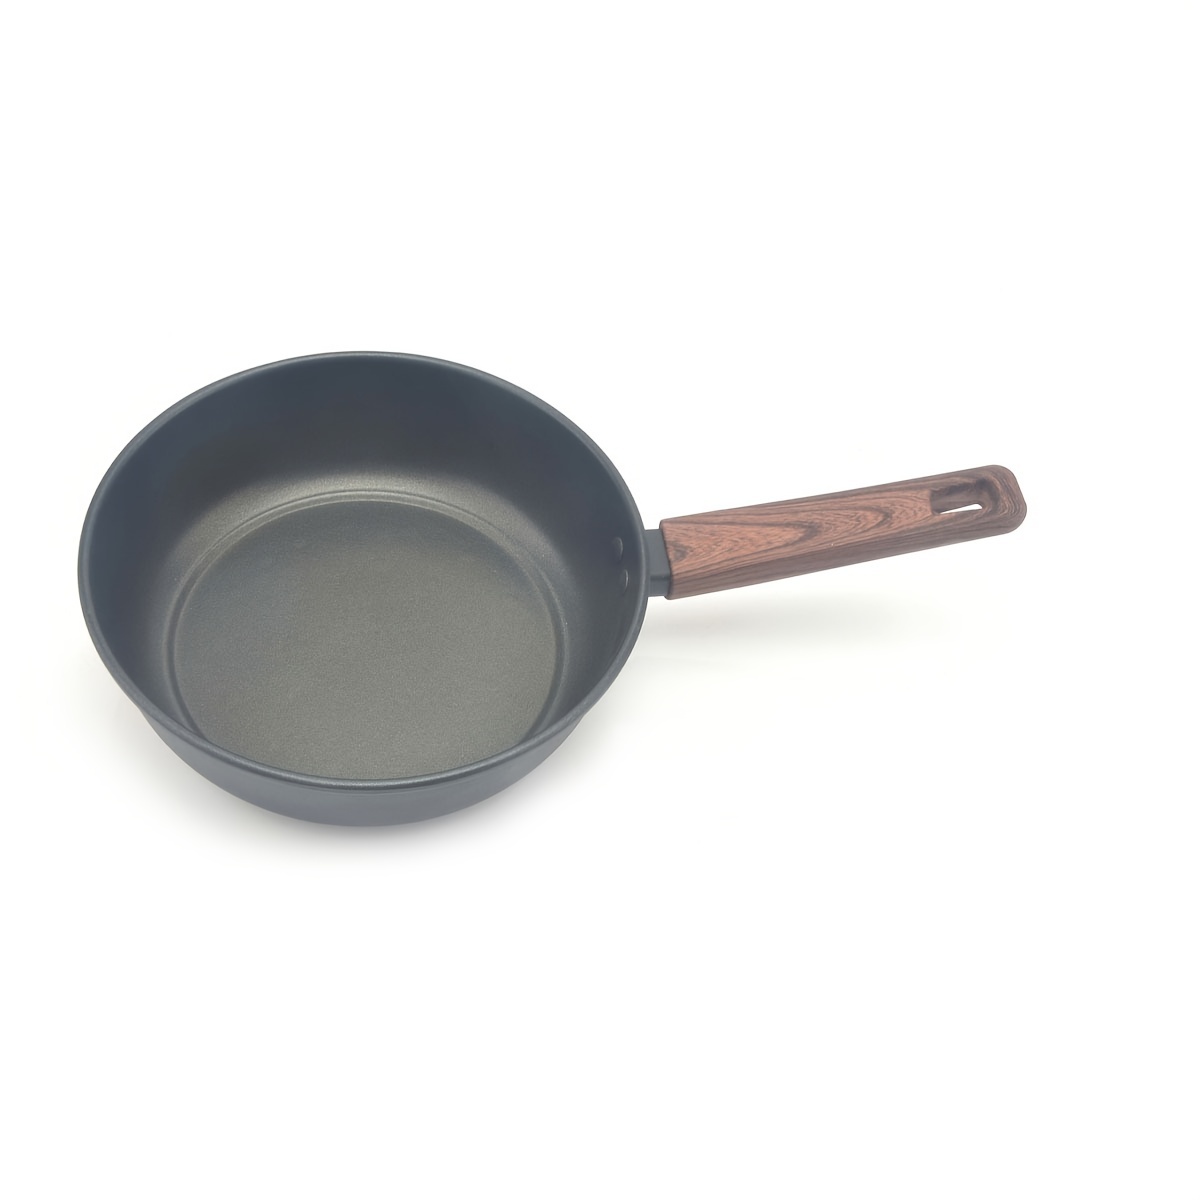 Carbon Steel Cookware: Skillets, Pans & More